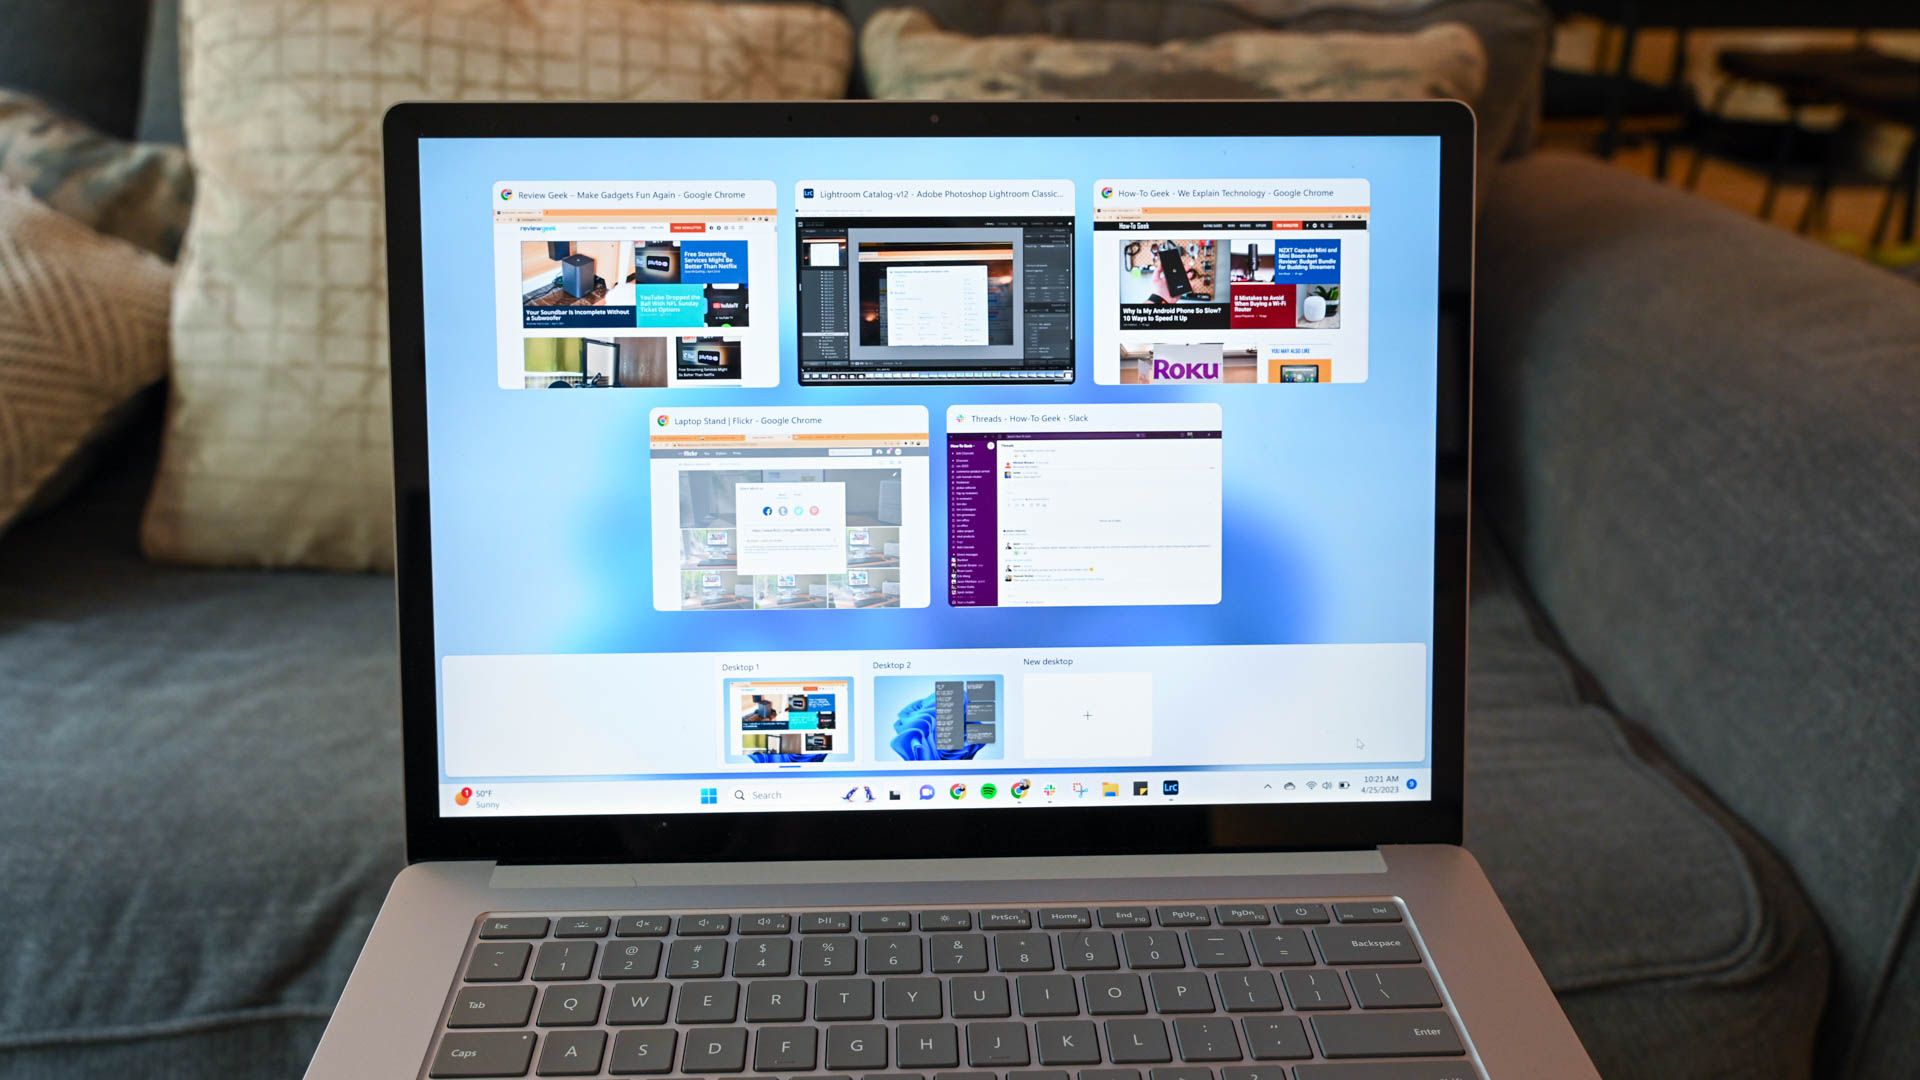 Task view open on a surface laptop to open a alternate desktop